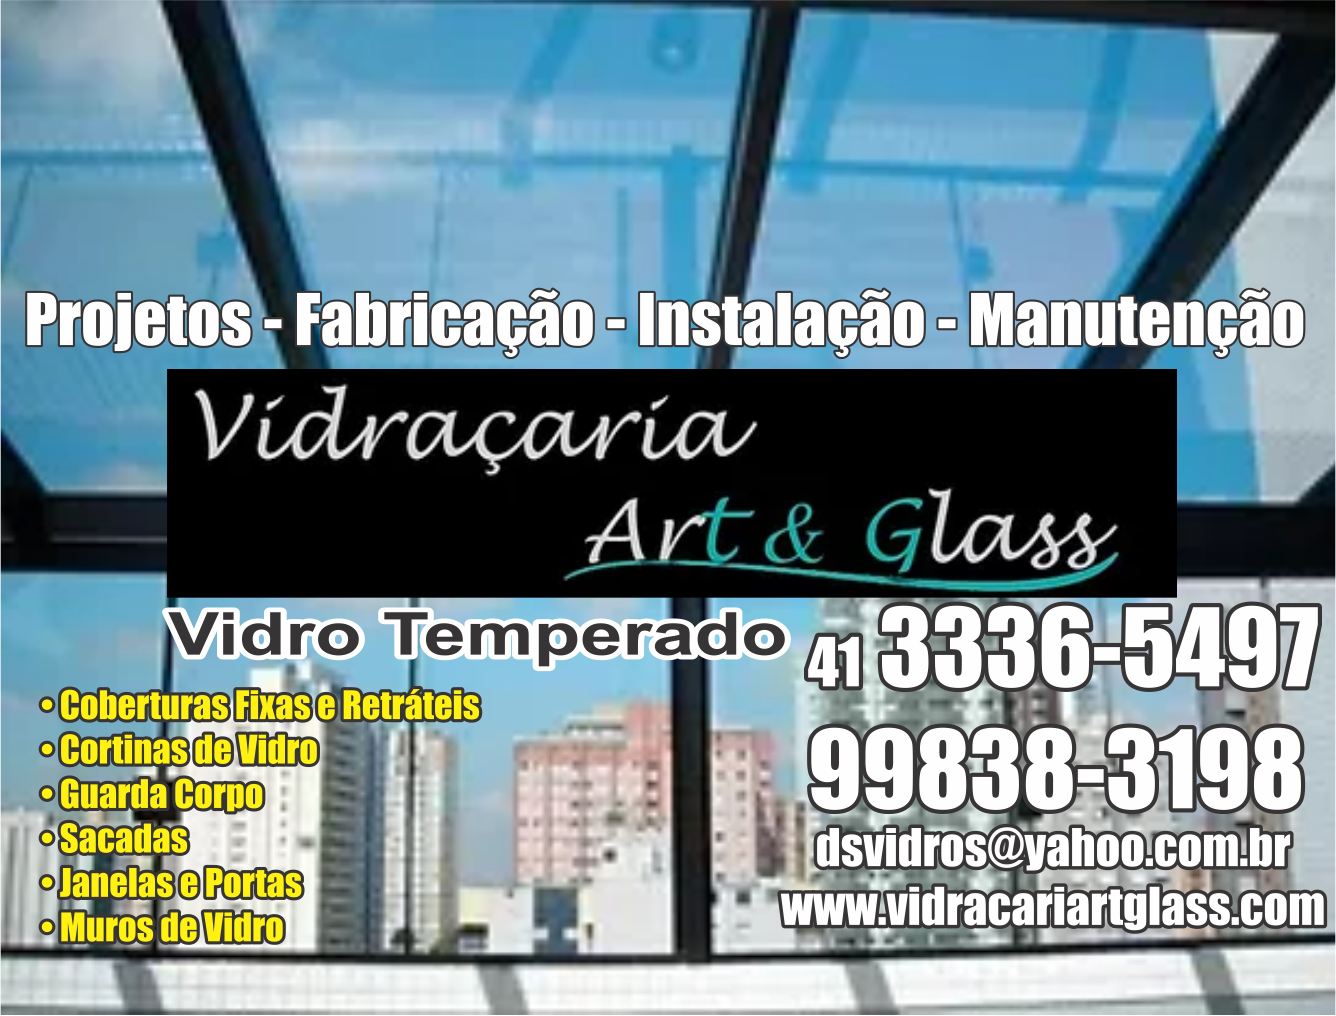 Vidraçaria Art & Glass      RUA JACOB WELLNER, 223, CURITIBA - PR  Fones: (41)3336-5497 / (41) 99838-3198